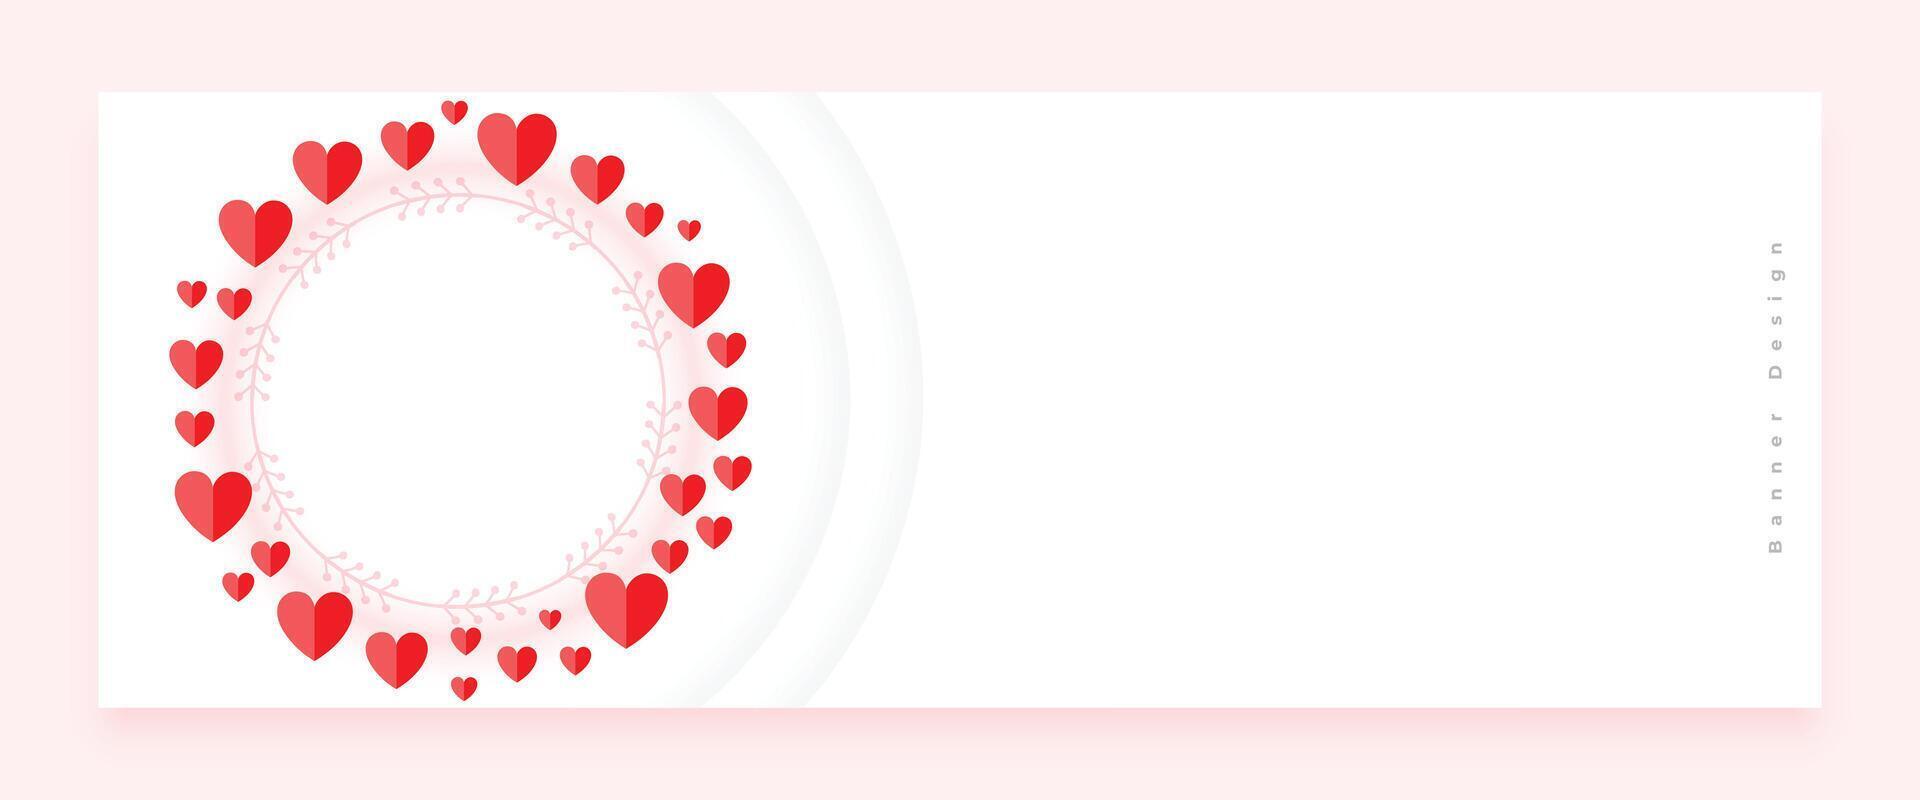 Papierschnitt Liebe Herz Rahmen Banner zum Valentinsgrüße Tag Feier vektor